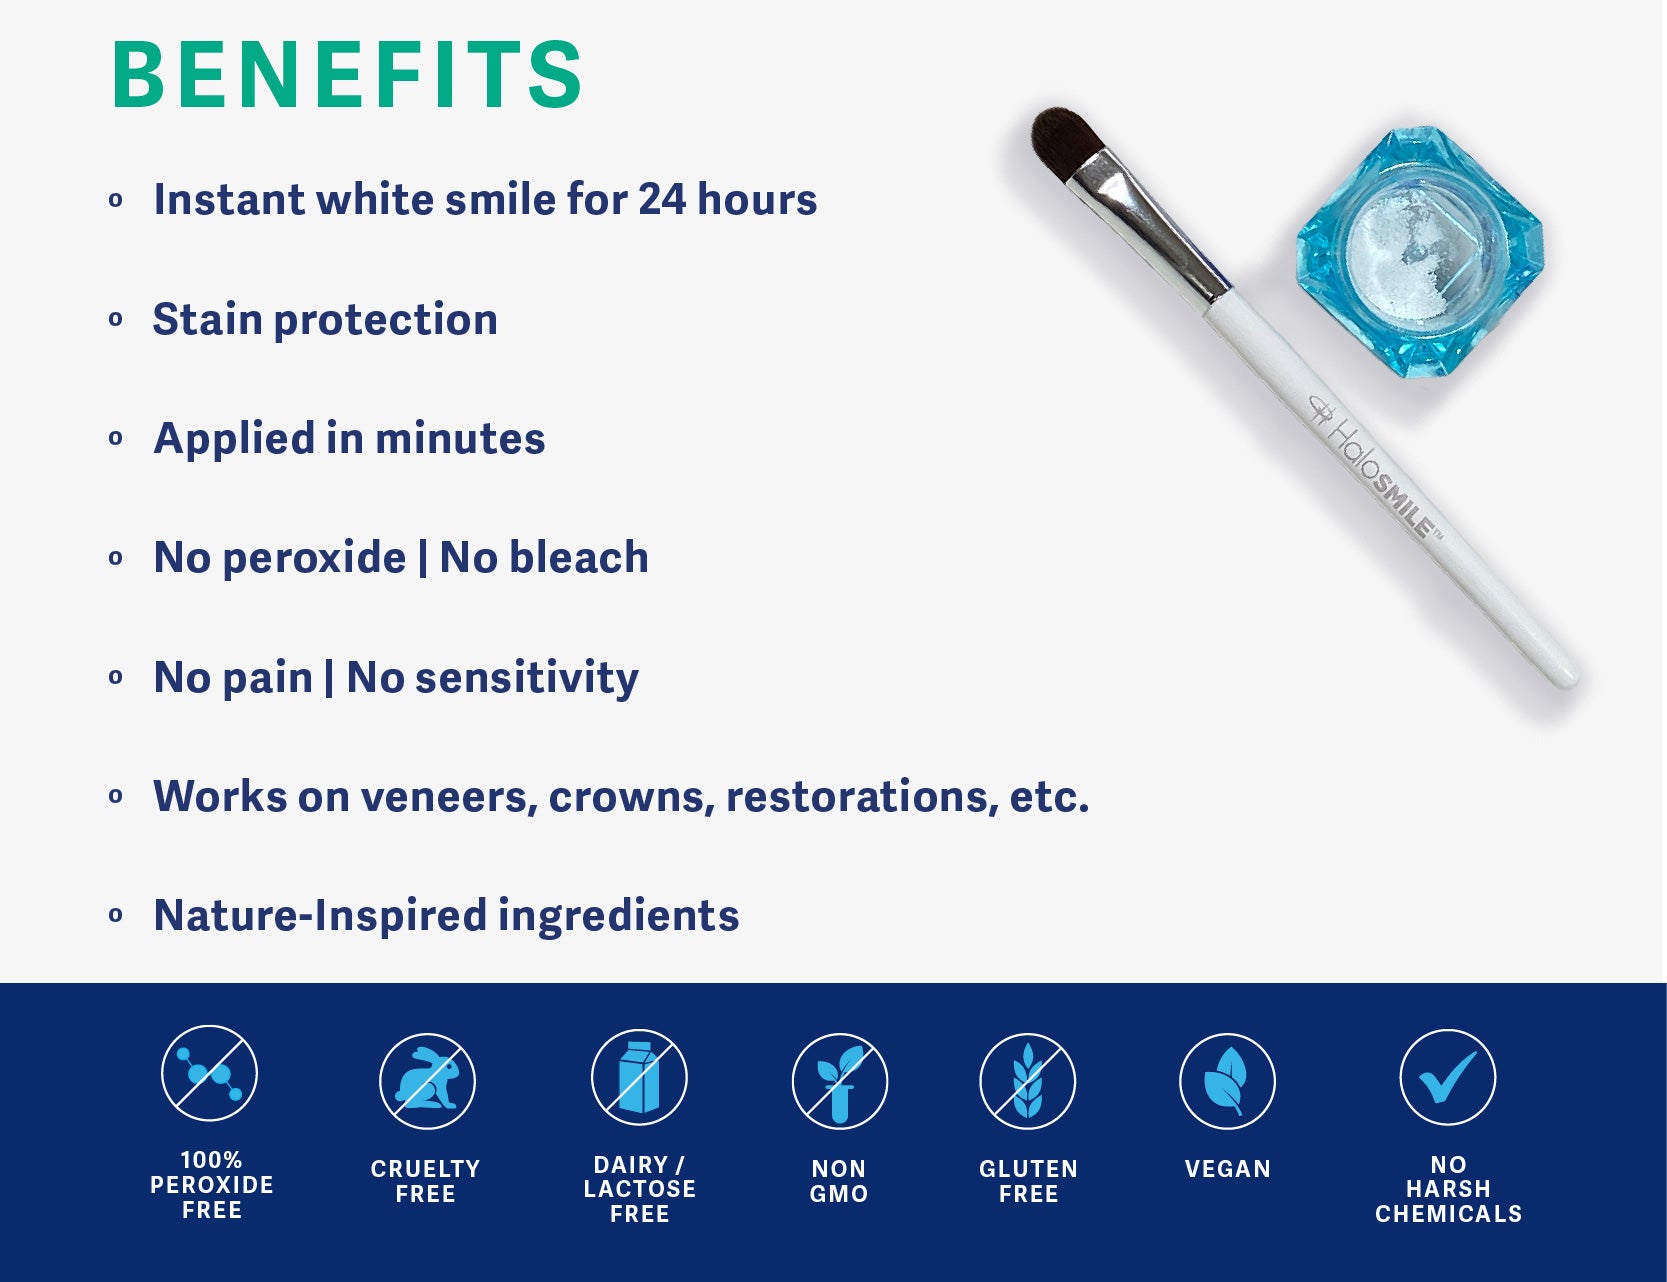 Benefits of Halo Smile Teeth Paint